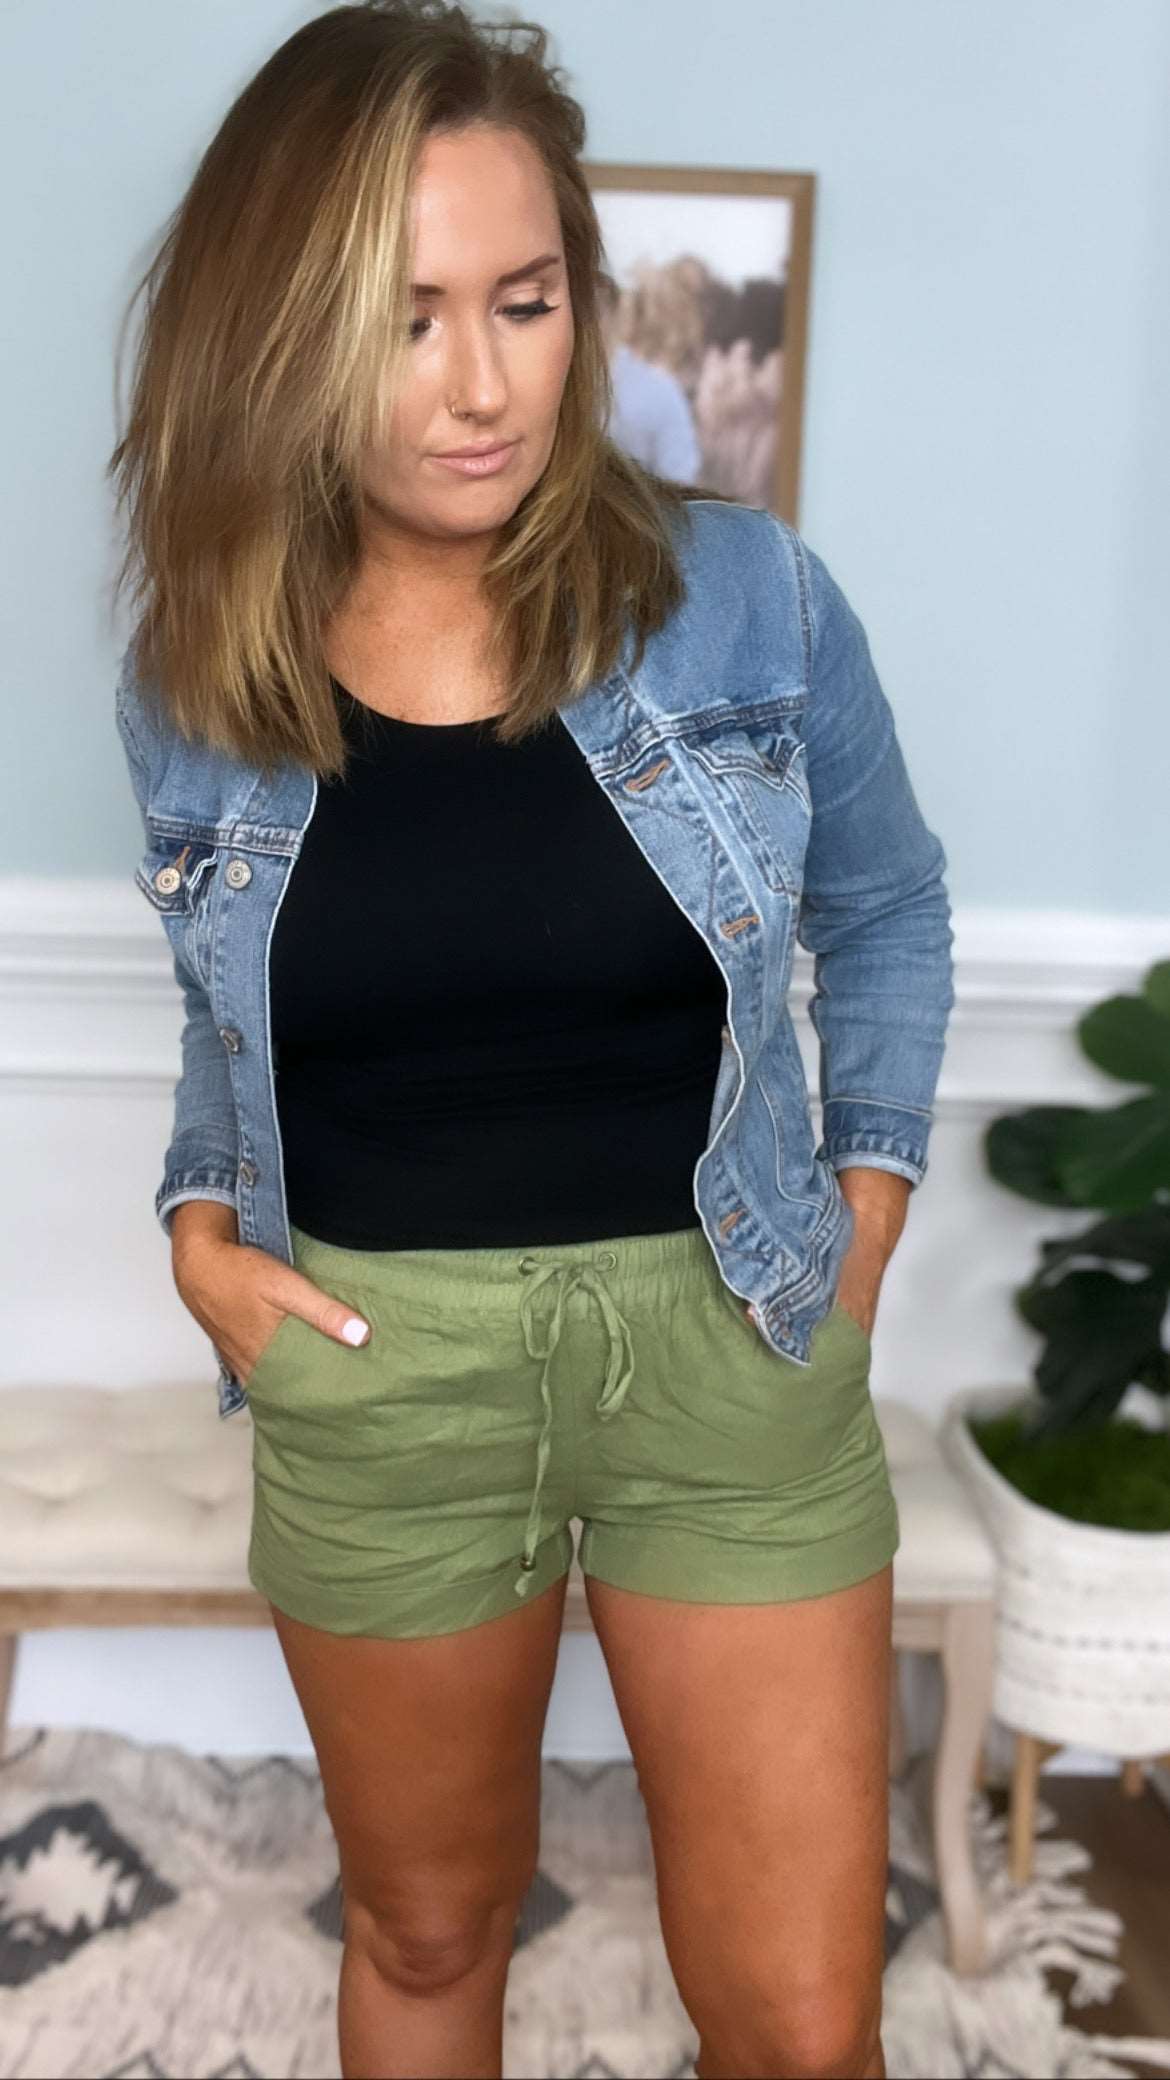 Olive Green Linen Shorts